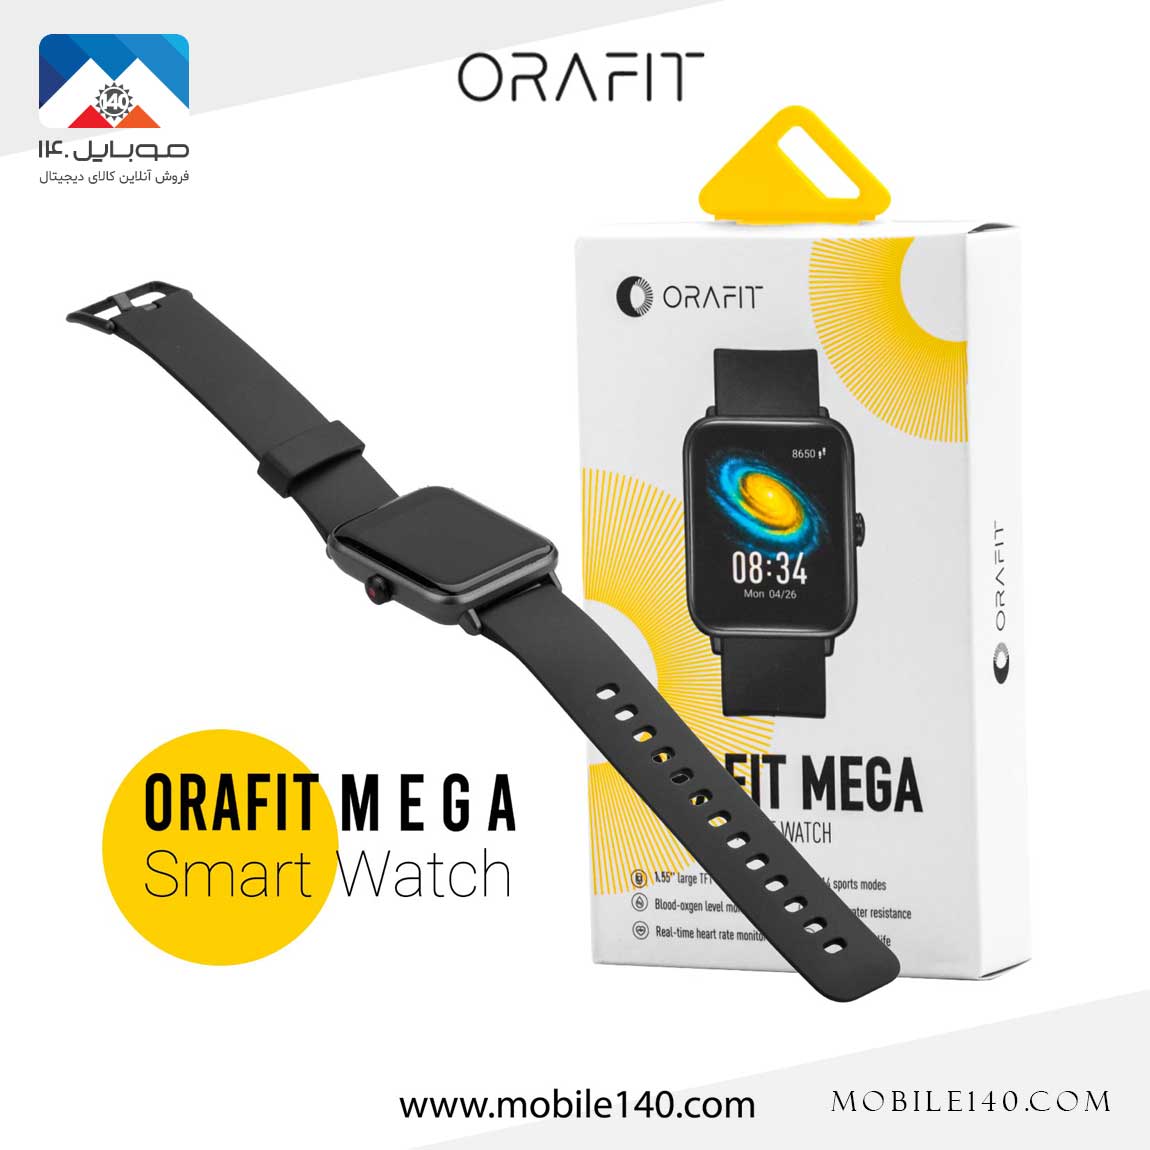 Orafit Omega Smart watch 3